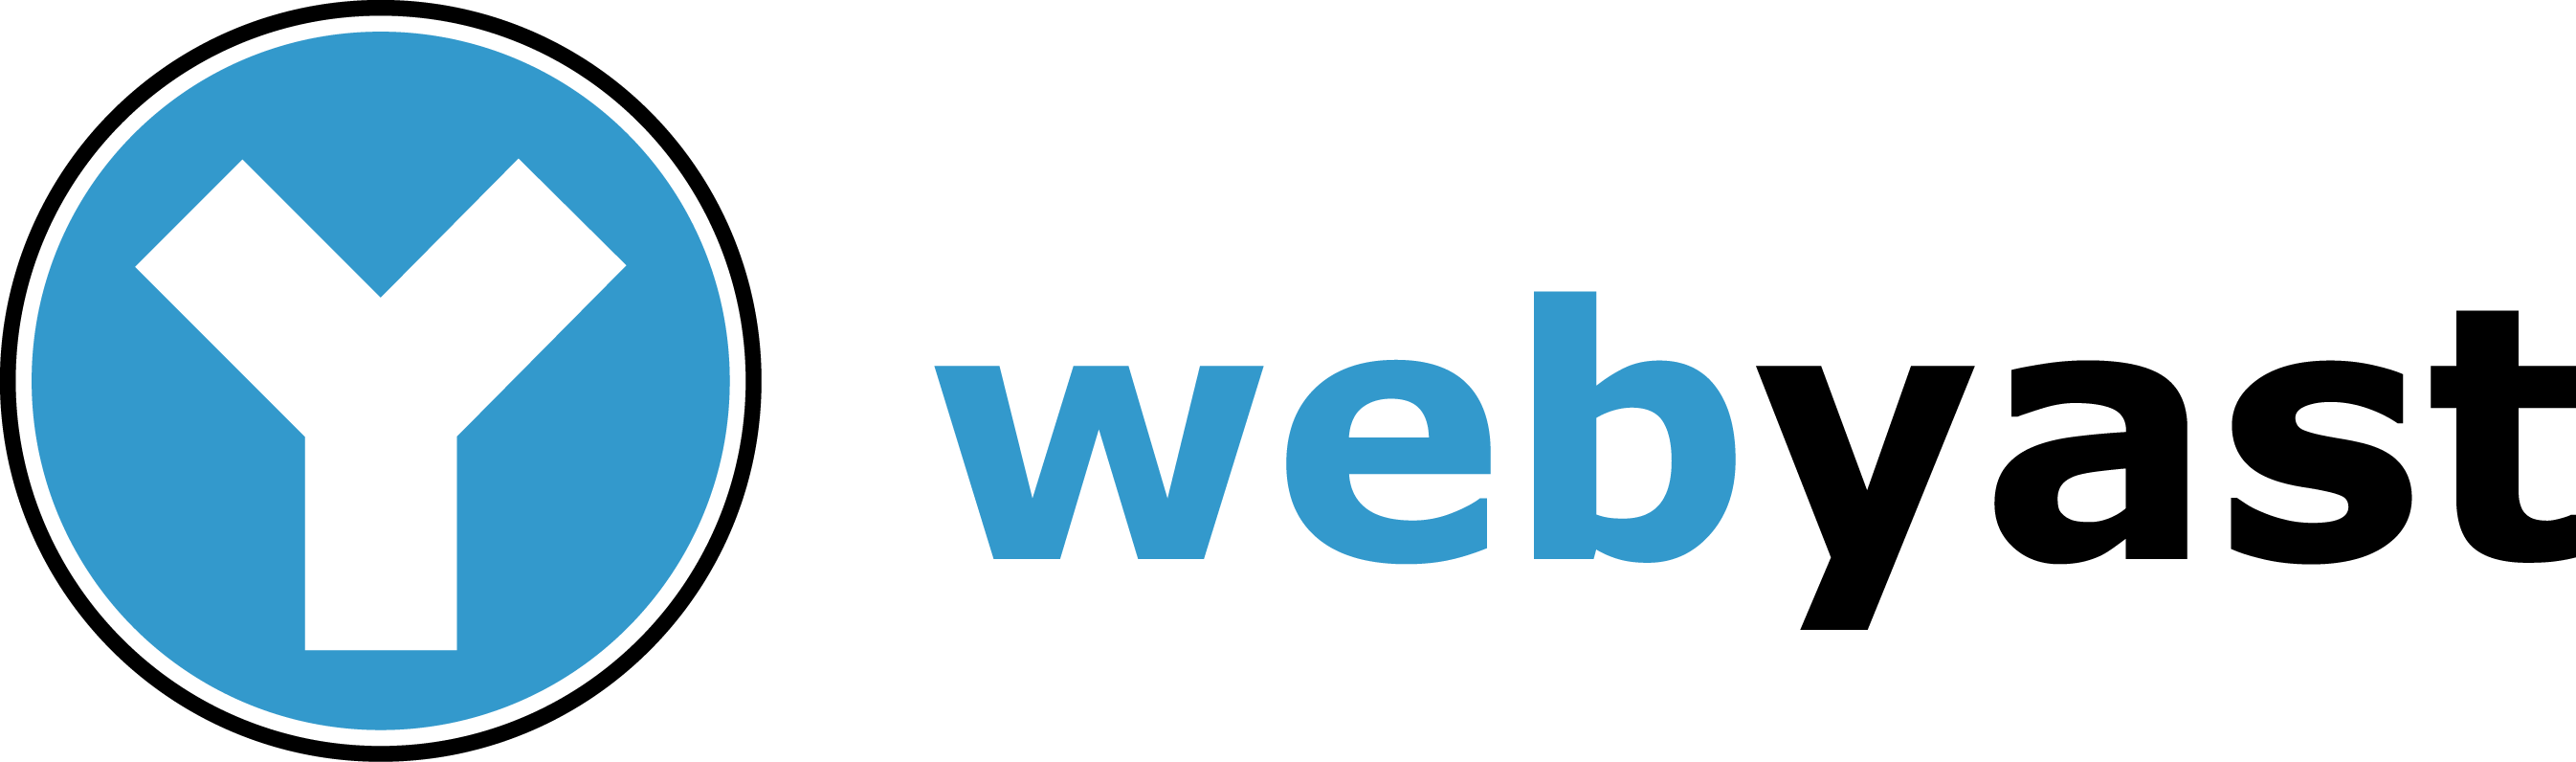 WebYast-Logo-300dpi.png